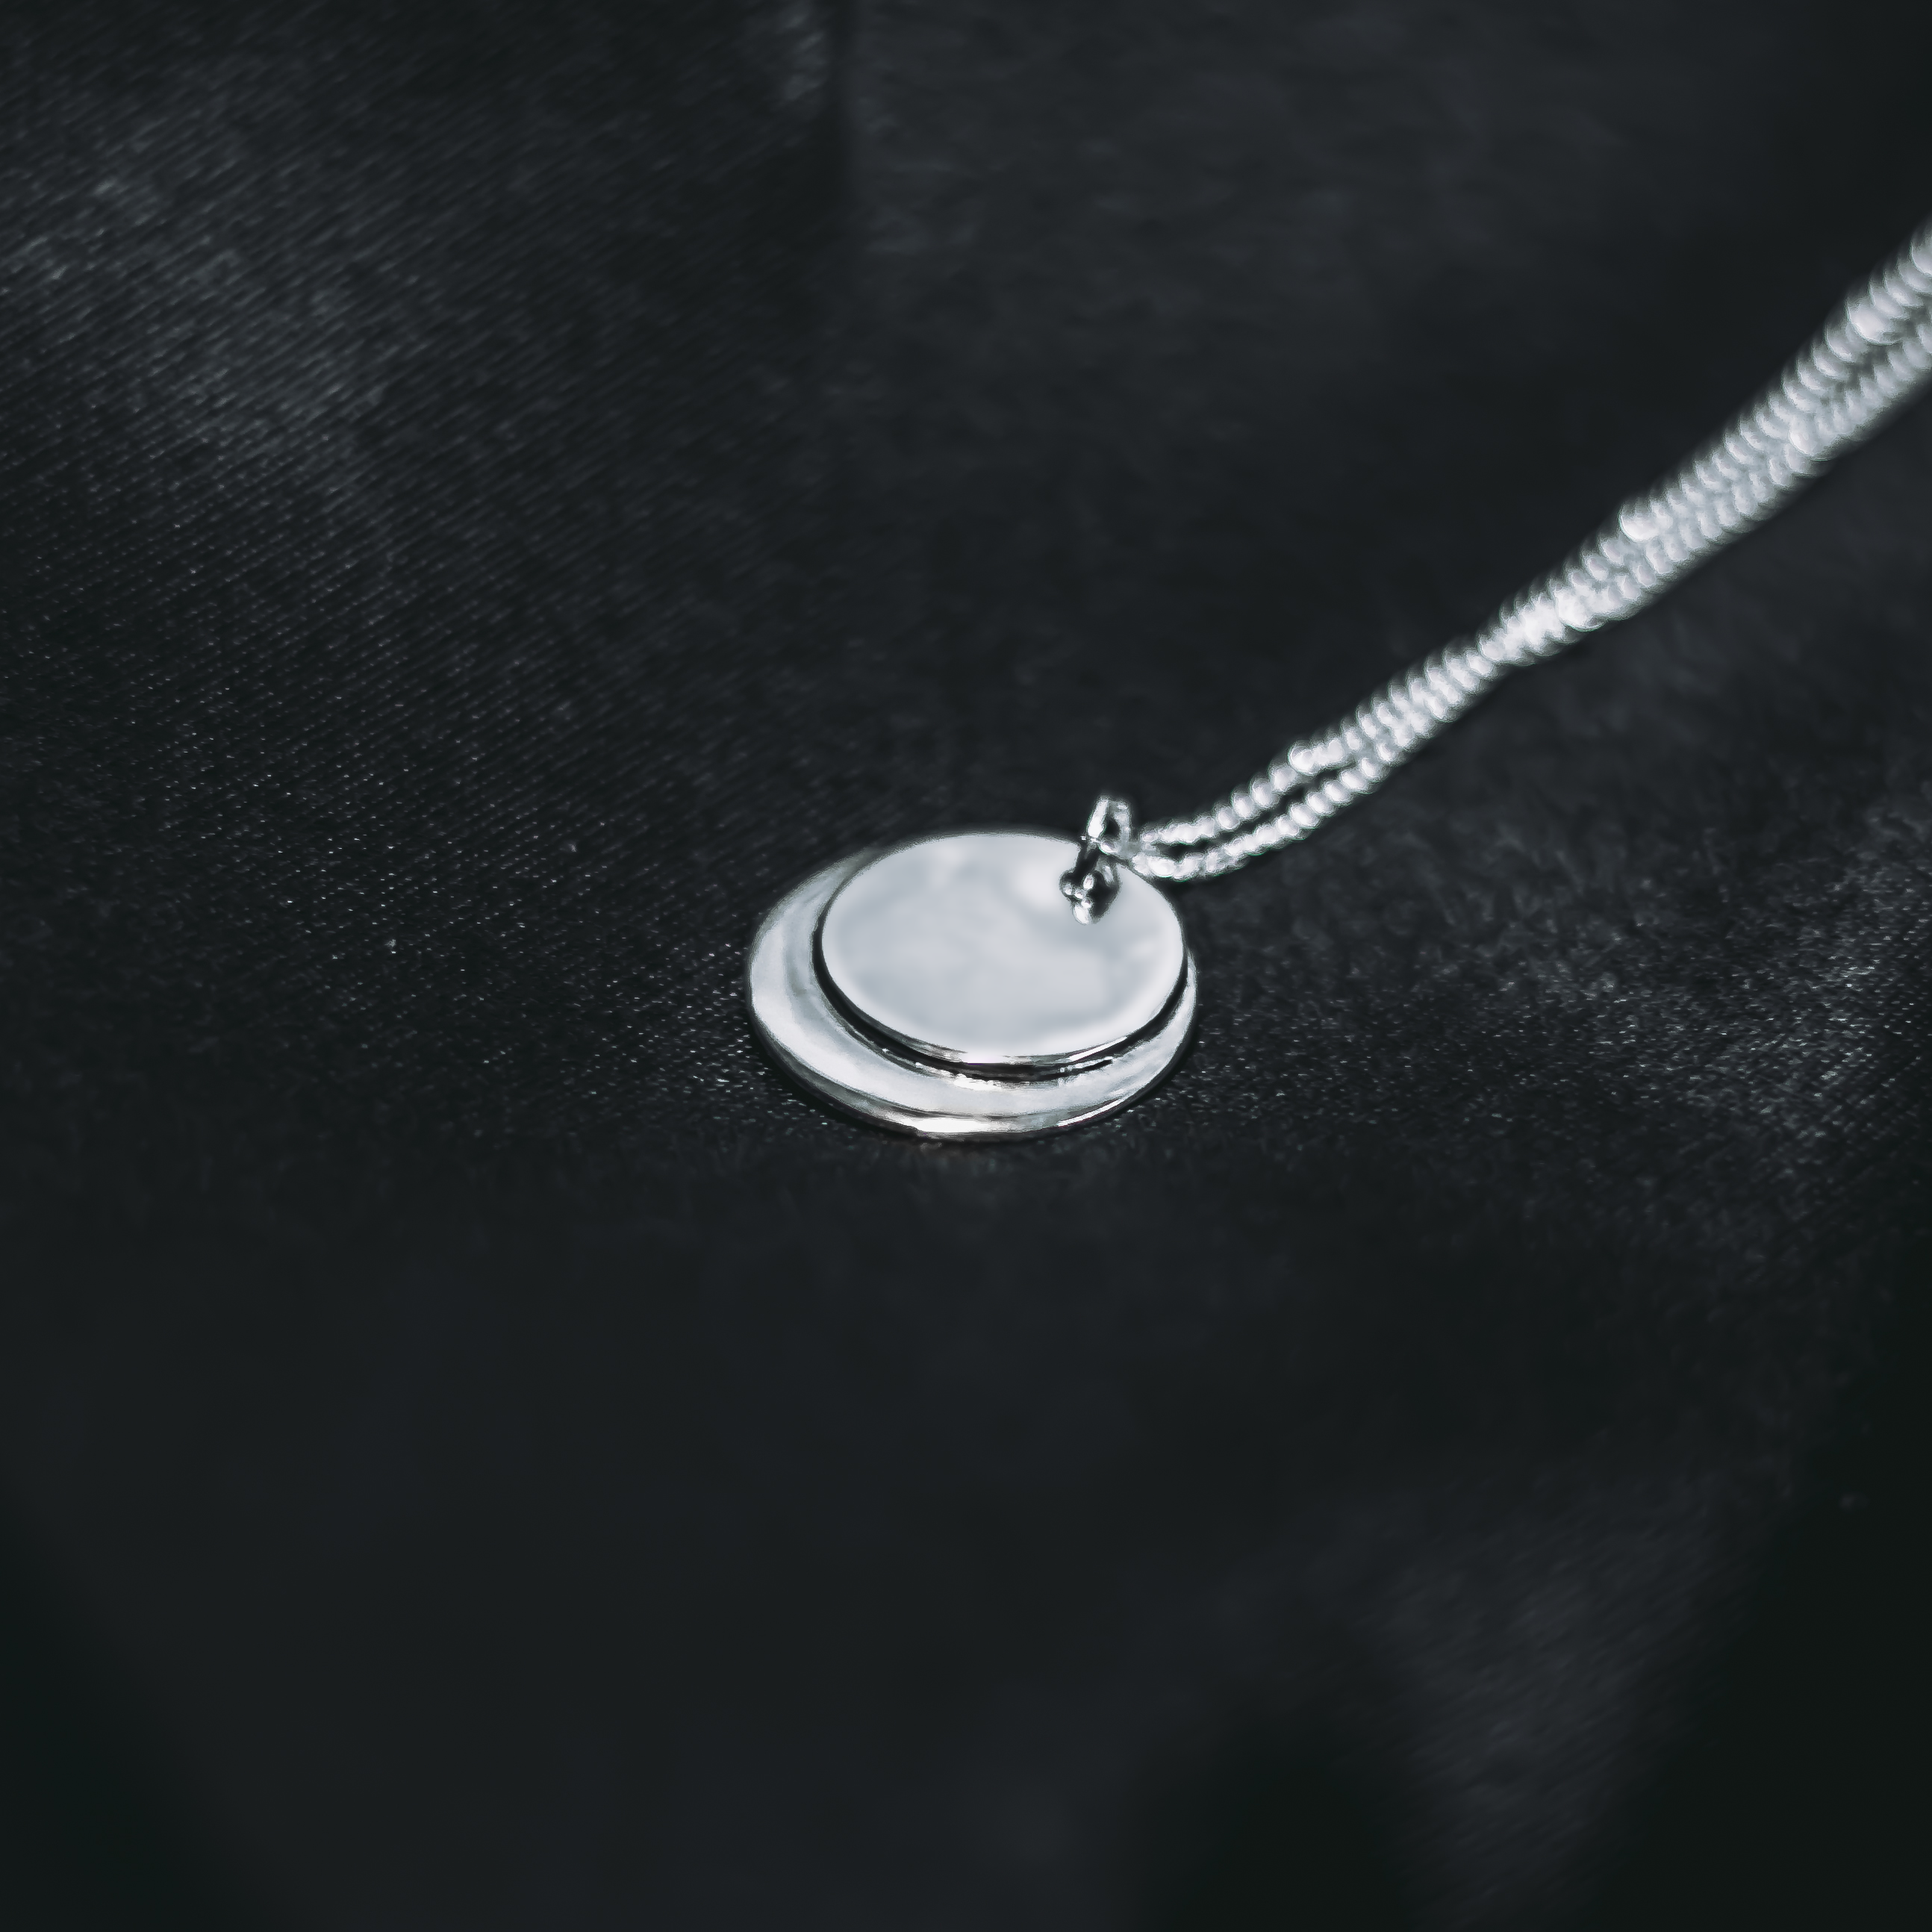 Eclipse Pendant Necklace - Silver